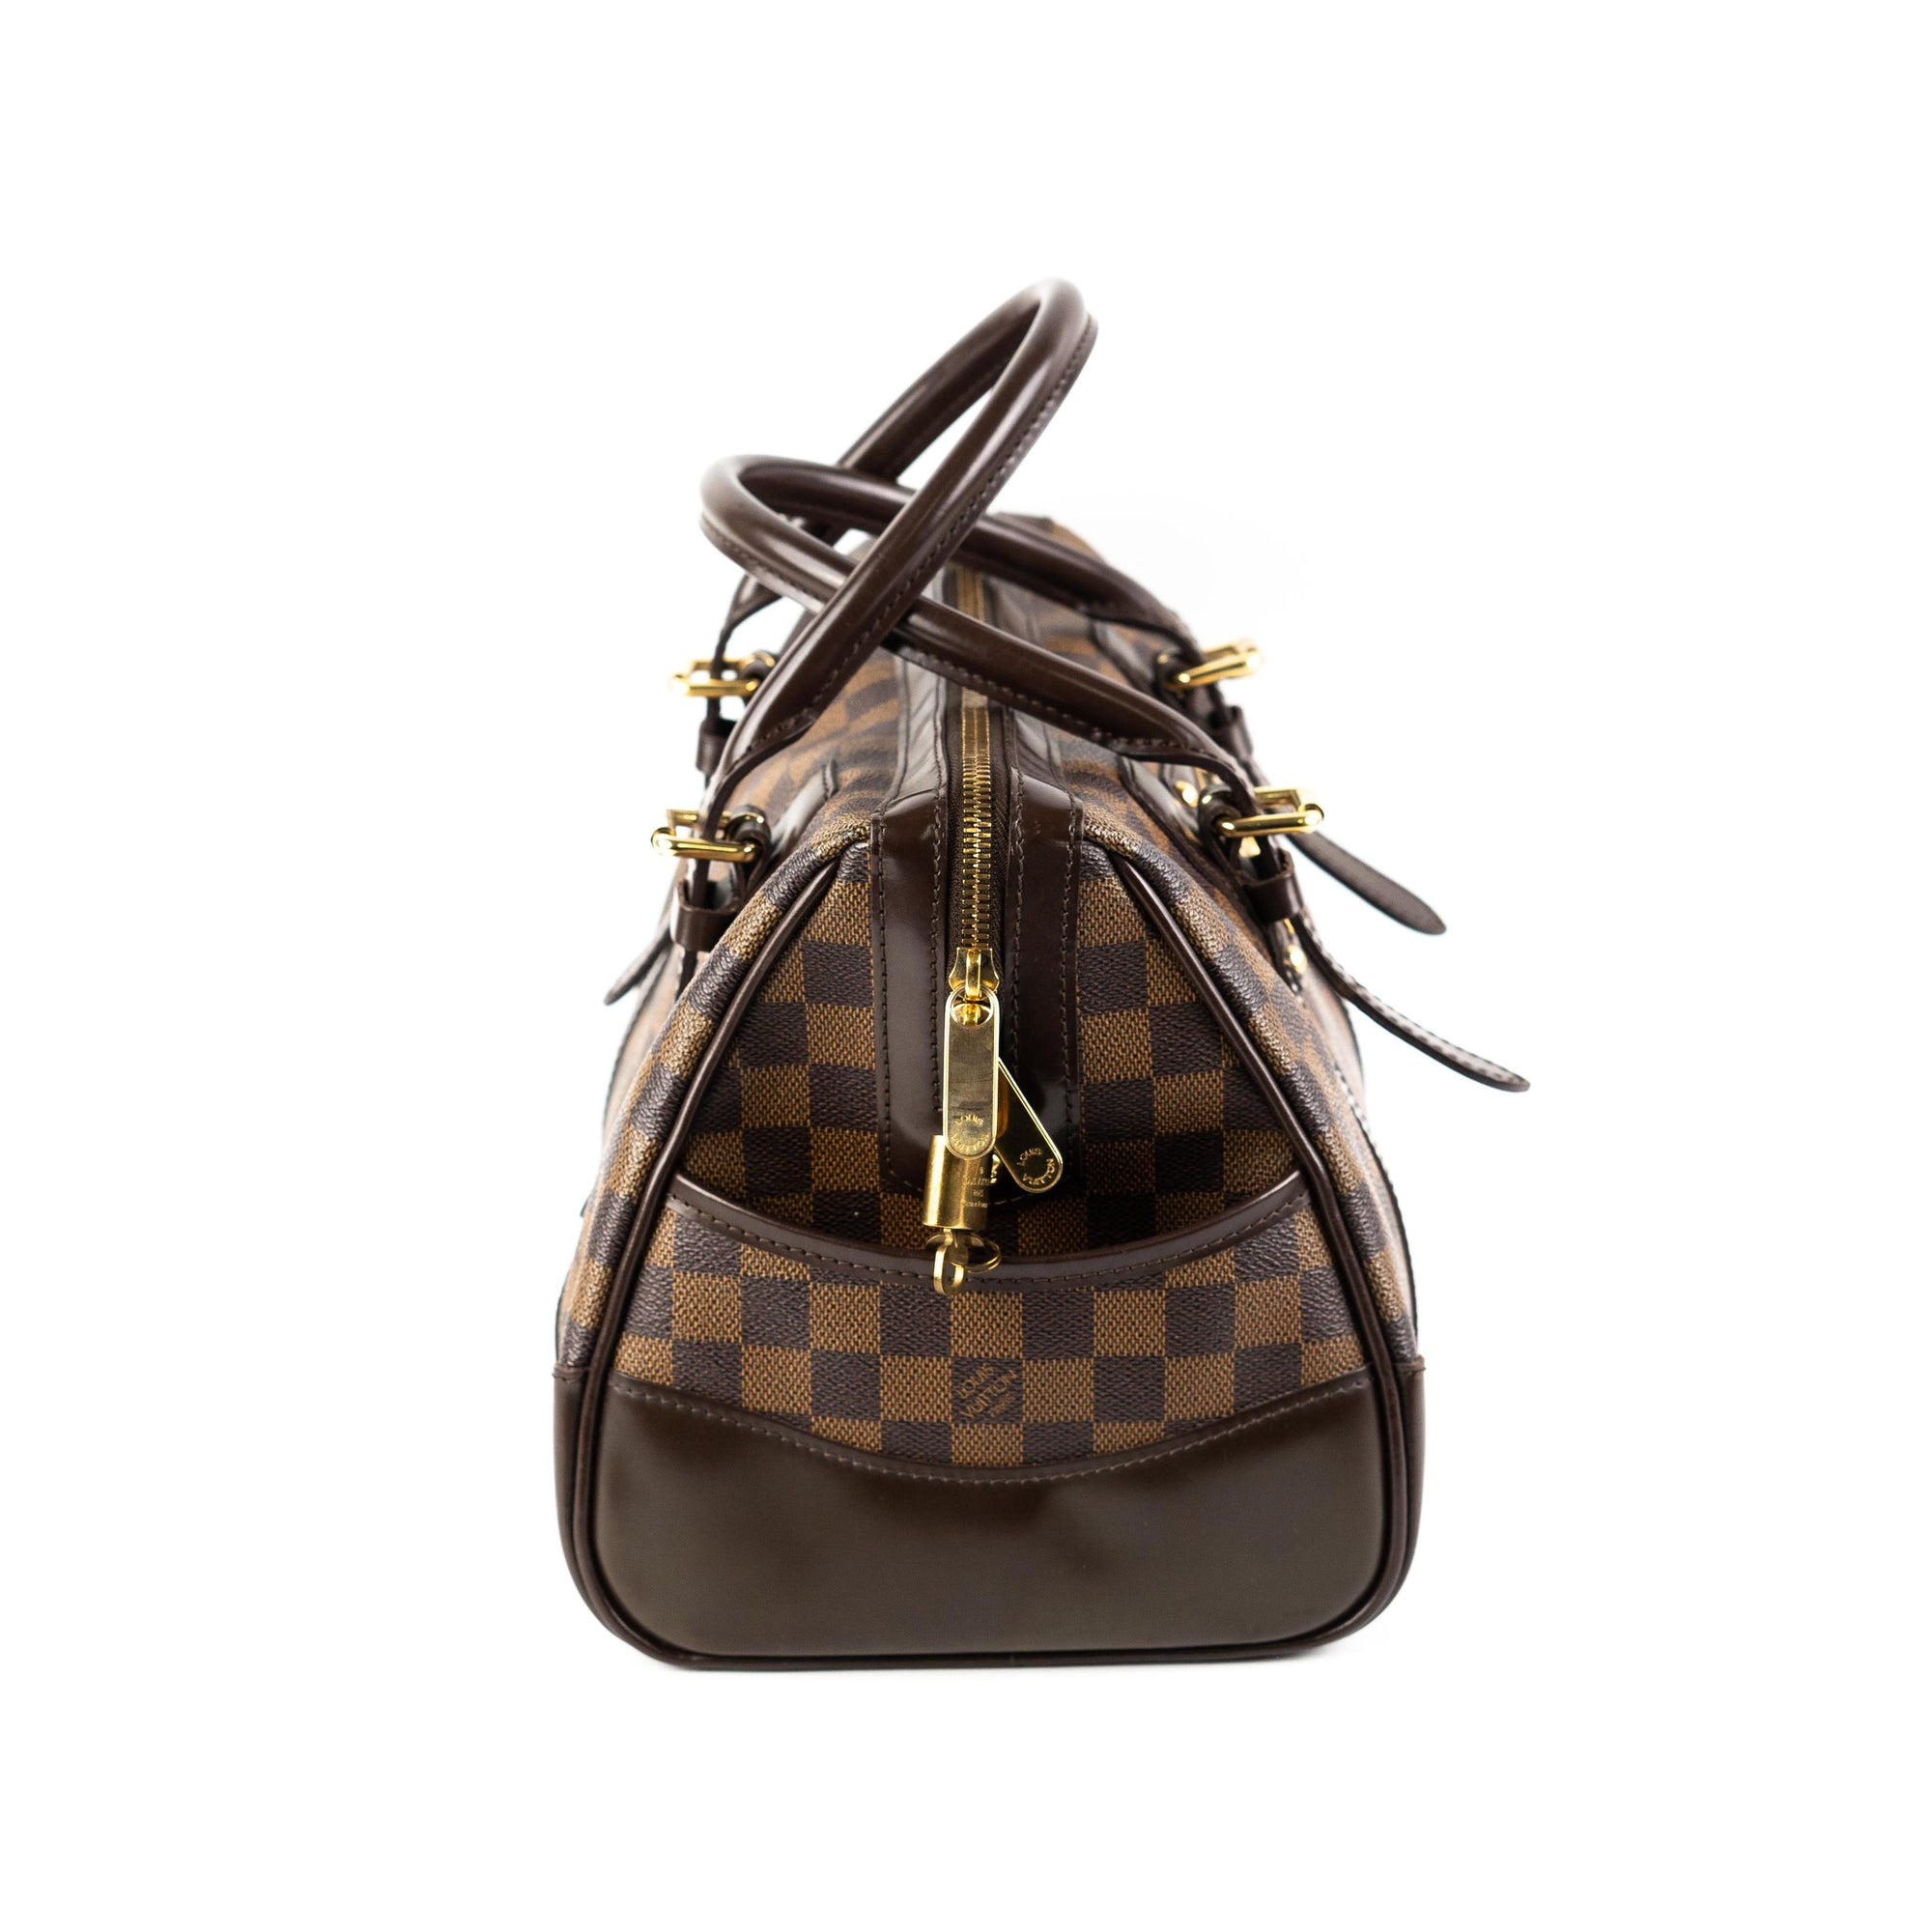 Louis Vuitton Berkeley Bag Damier Ebene - THE PURSE AFFAIR